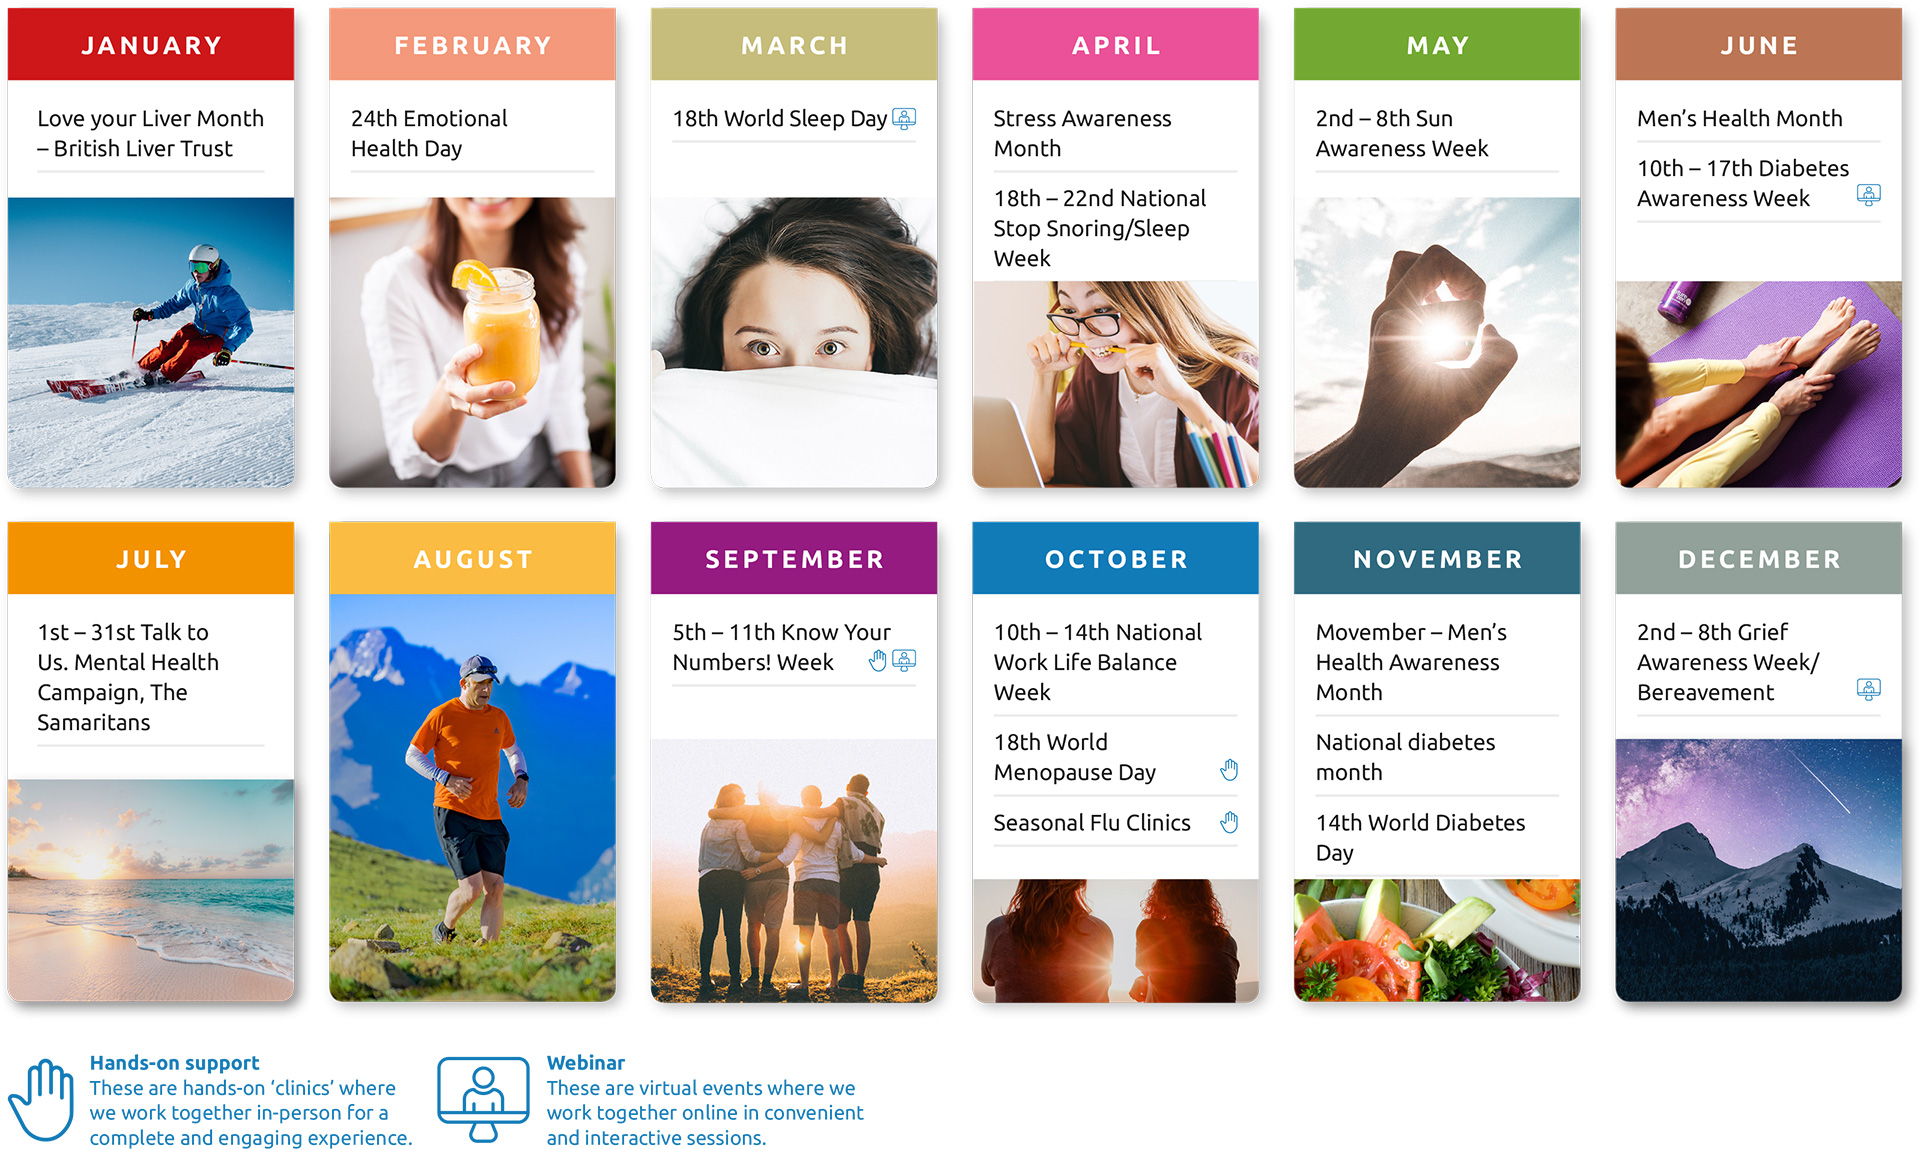 Health in hand calendar: maintain workforce health